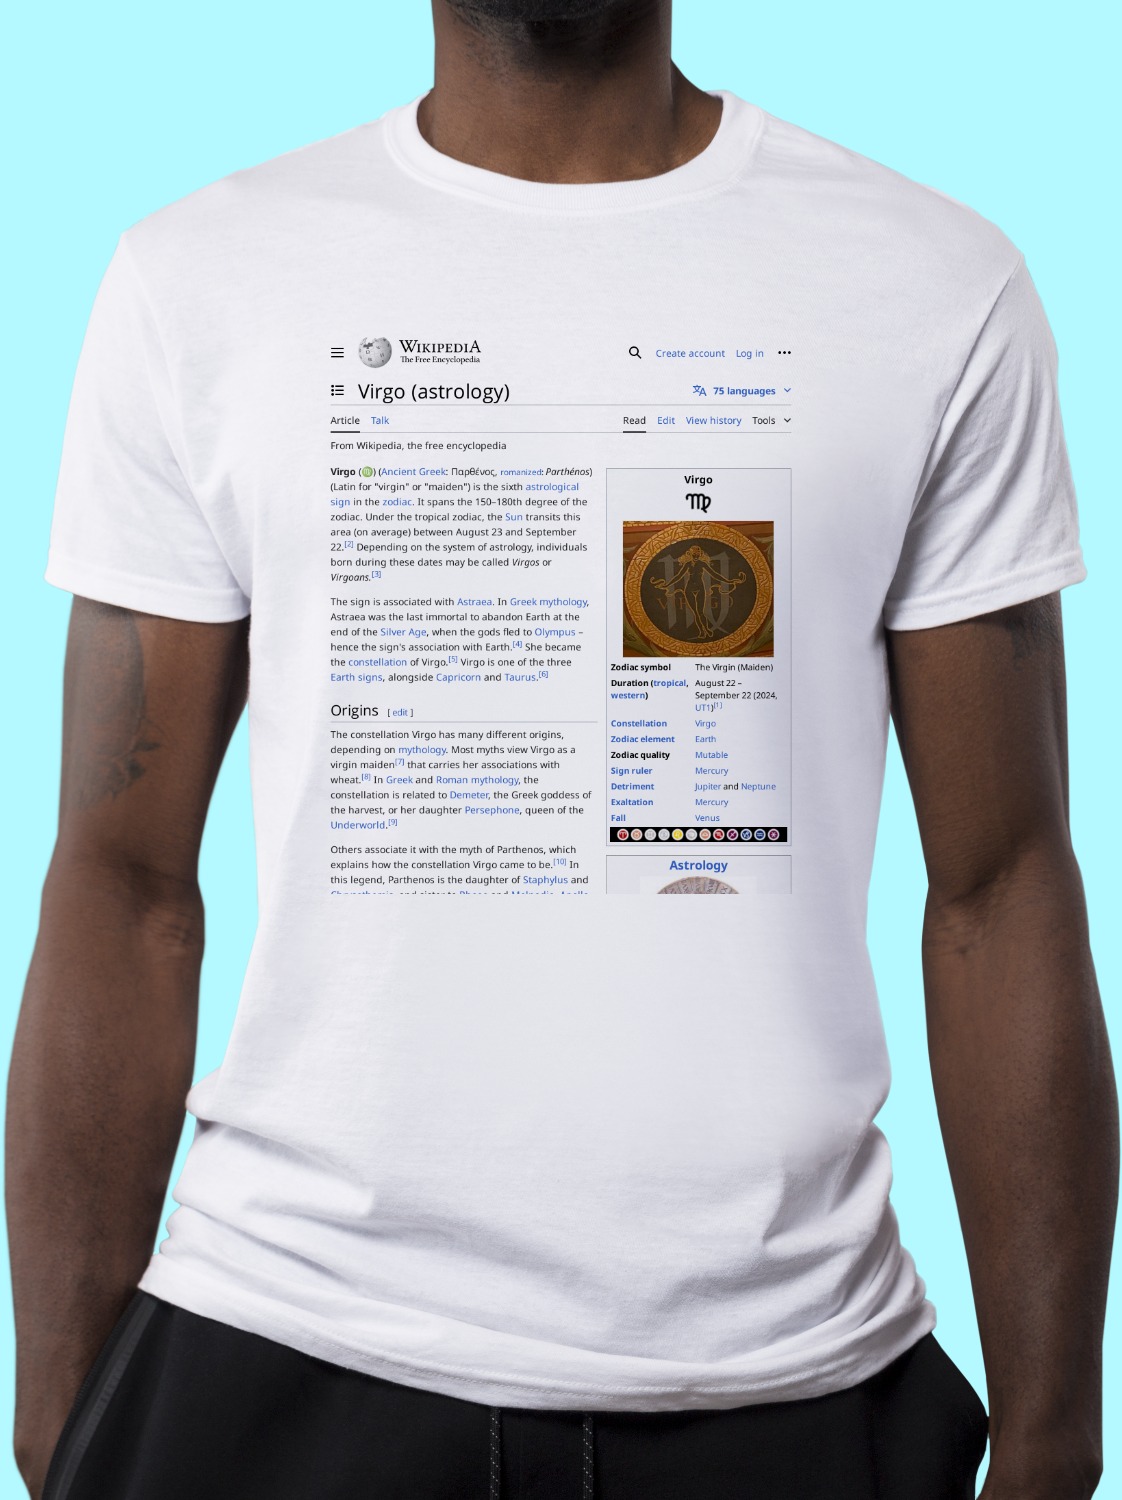 Virgo_(astrology) Wikipedia Shirt